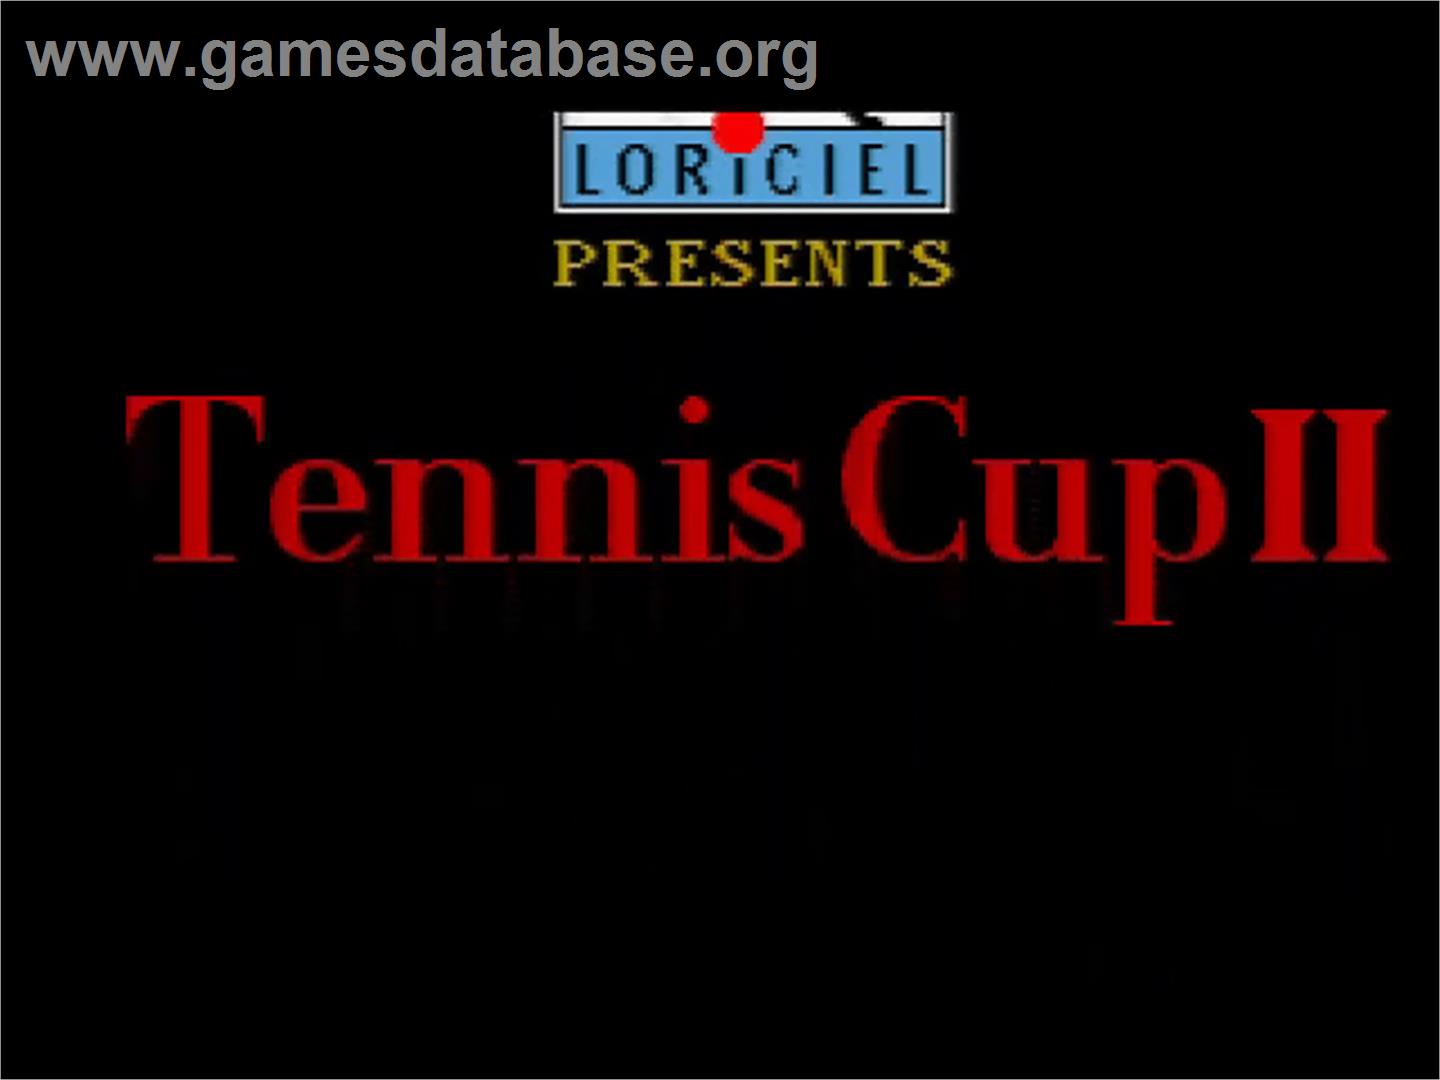 Tennis Cup II - Amstrad GX4000 - Artwork - Title Screen